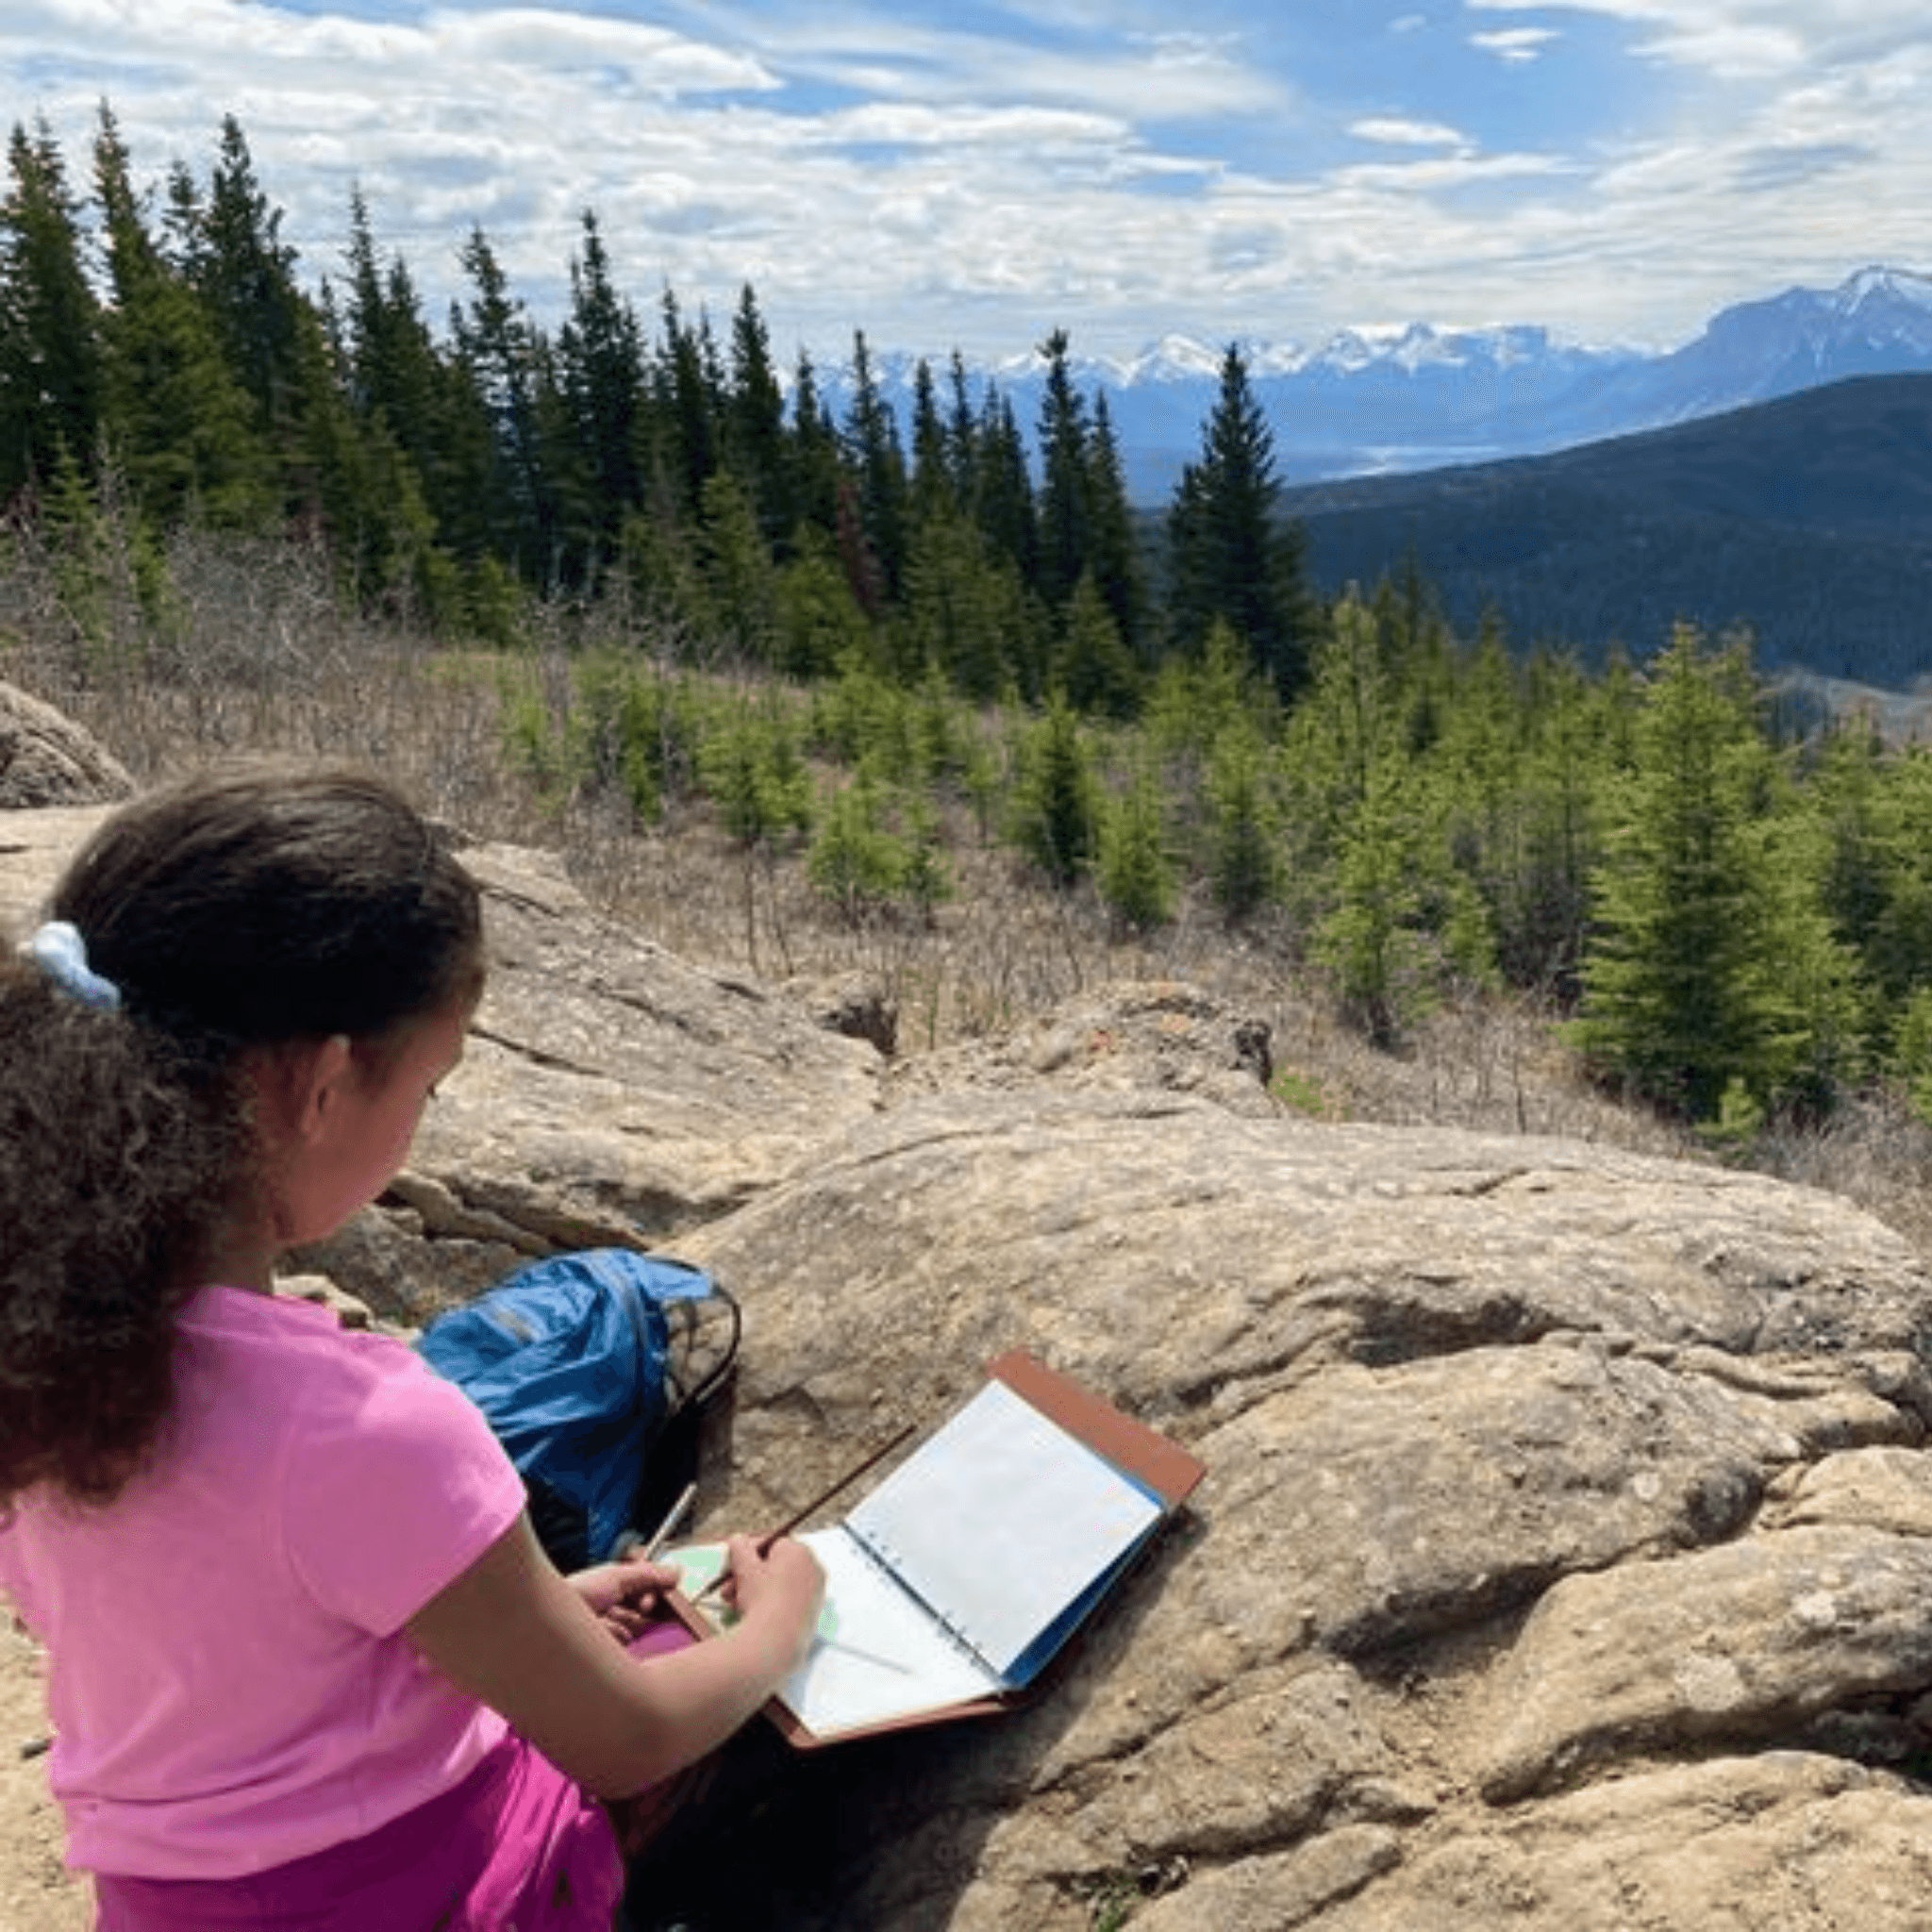 Field Notes Binder with Paper - Wild | Life Outdoor Adventures